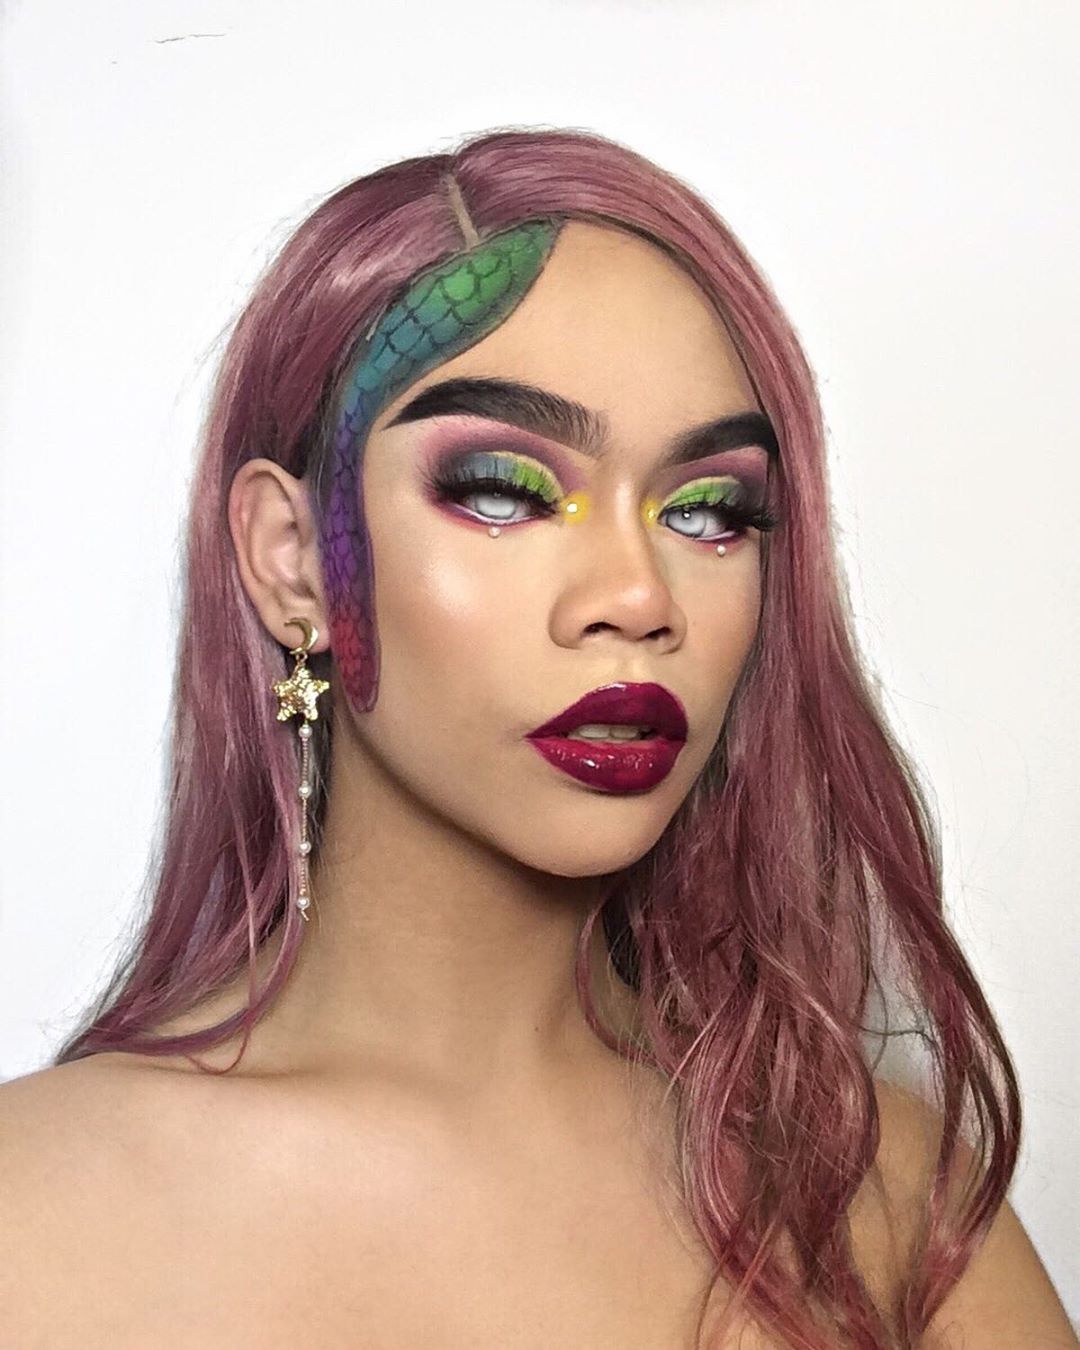 Mermaid makeup idea and inspiration